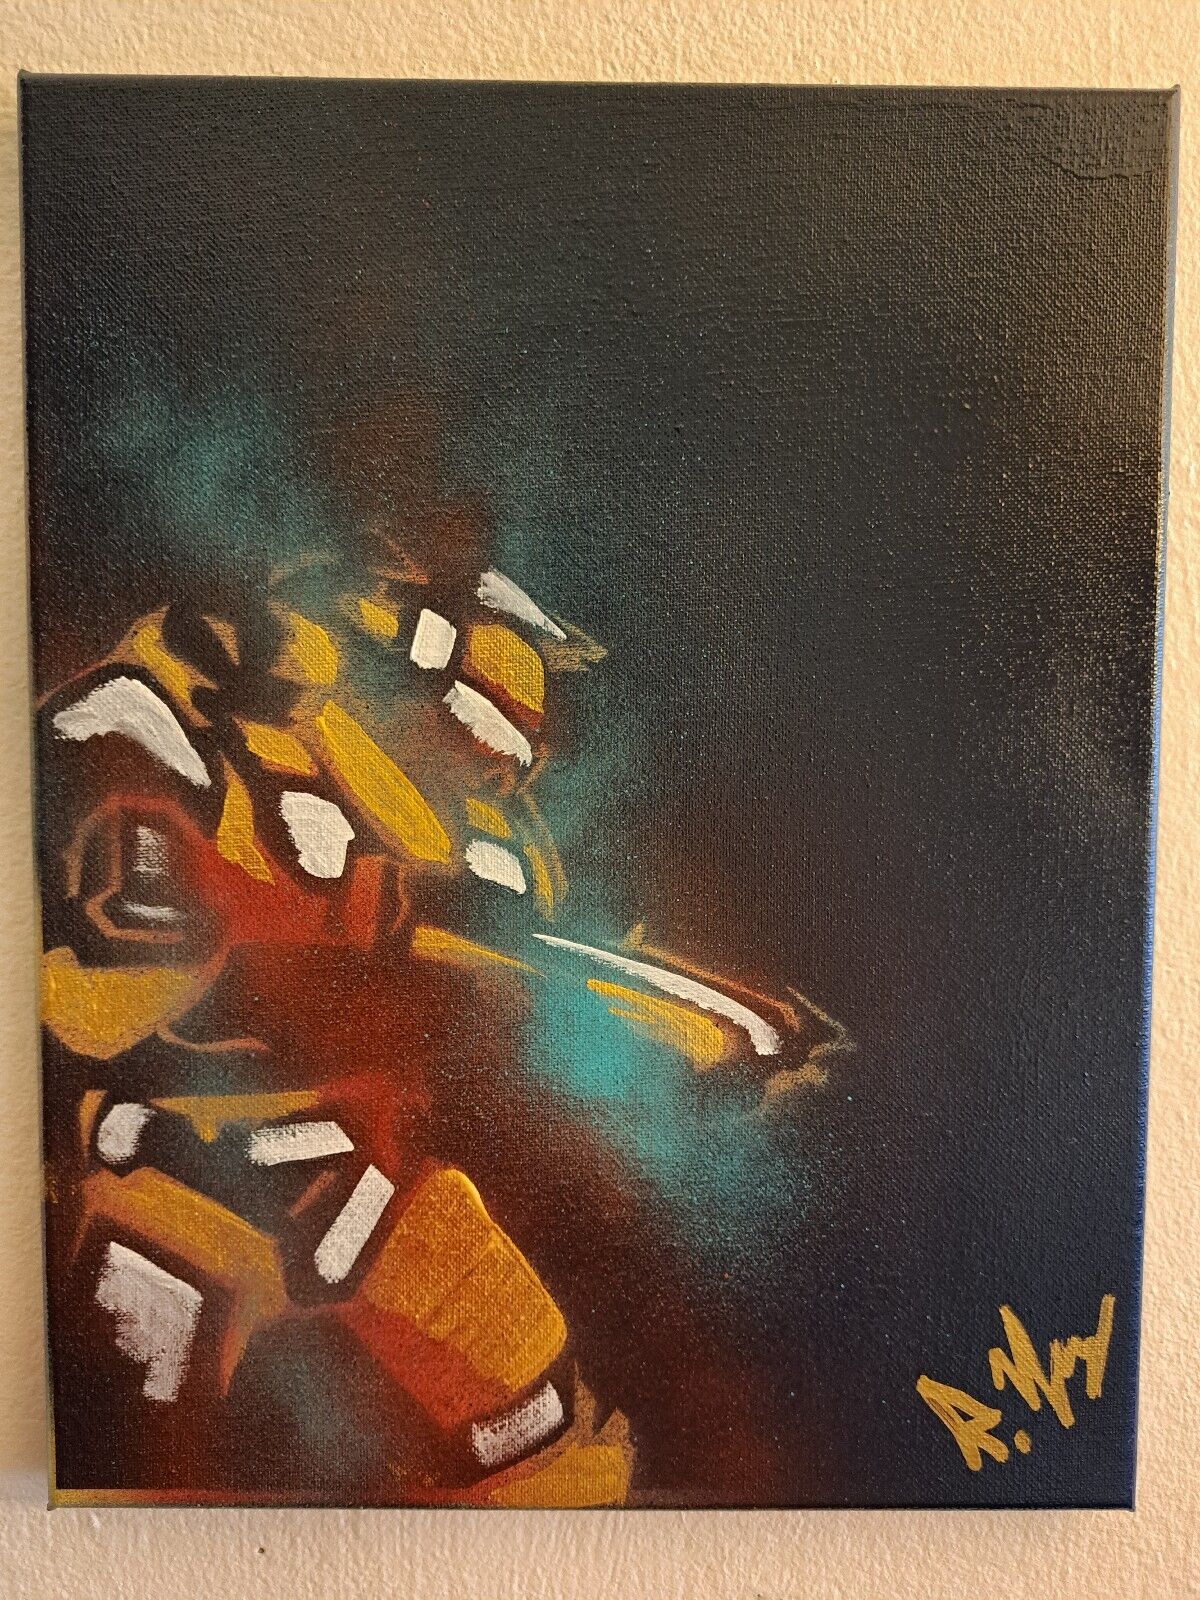 HOKi-painting of Master Chief from Halo,BANKSY Like,(OOAK)14x11 WALLART/SIGNED&#